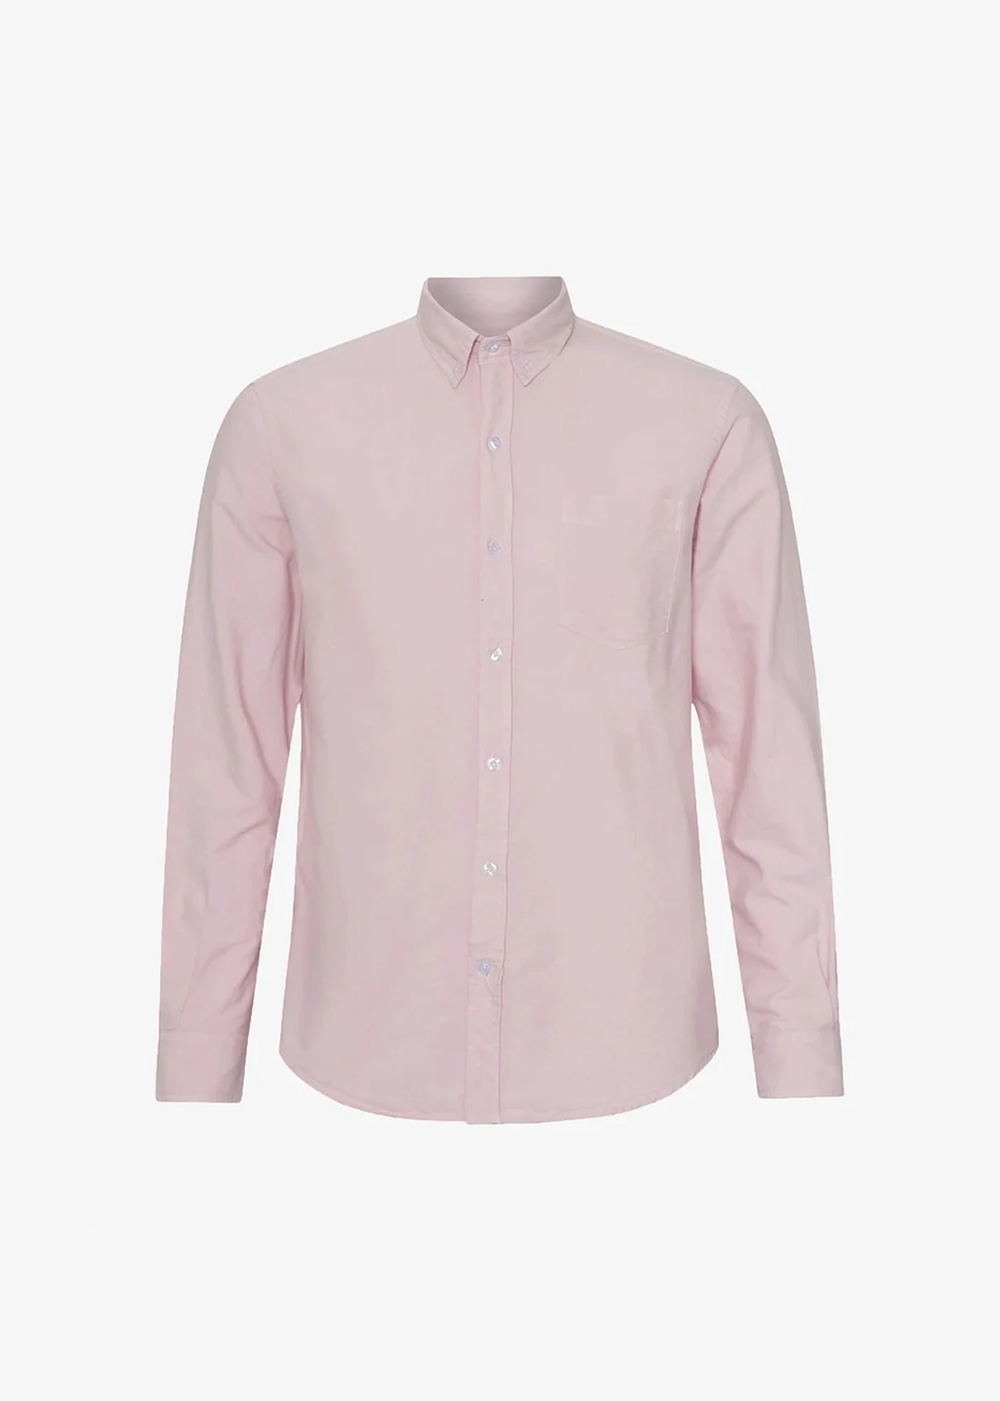 Organic Button Down Shirt - Faded Pink - Colorful Standard Canada - Danali